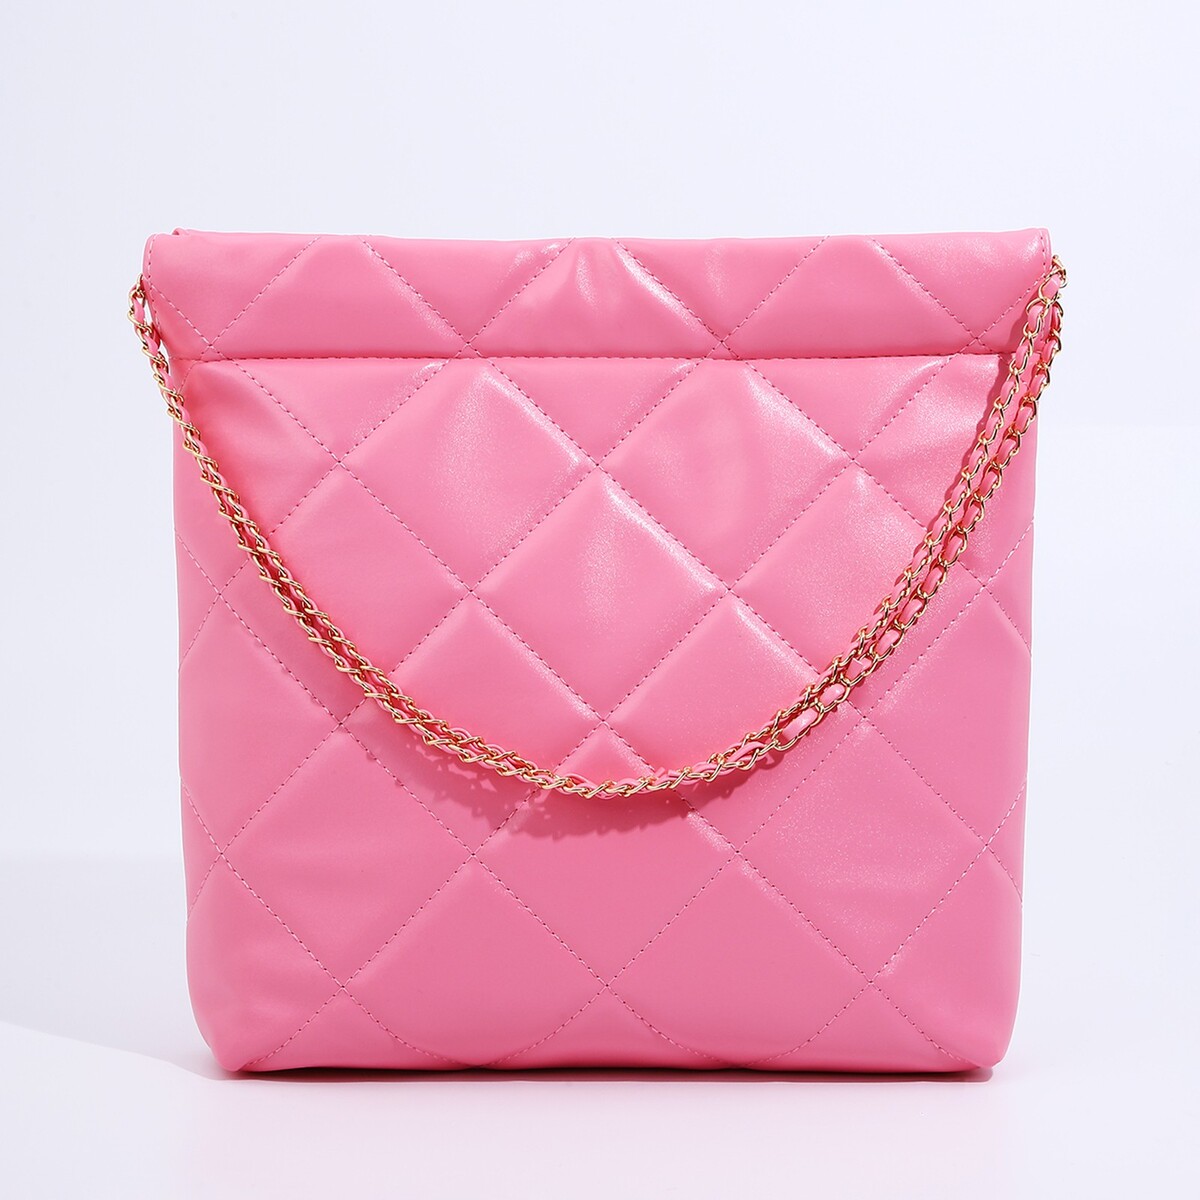 Сумка-мешок без застежки, цвет розовый косметичка мешок с завязками сиренево розовый